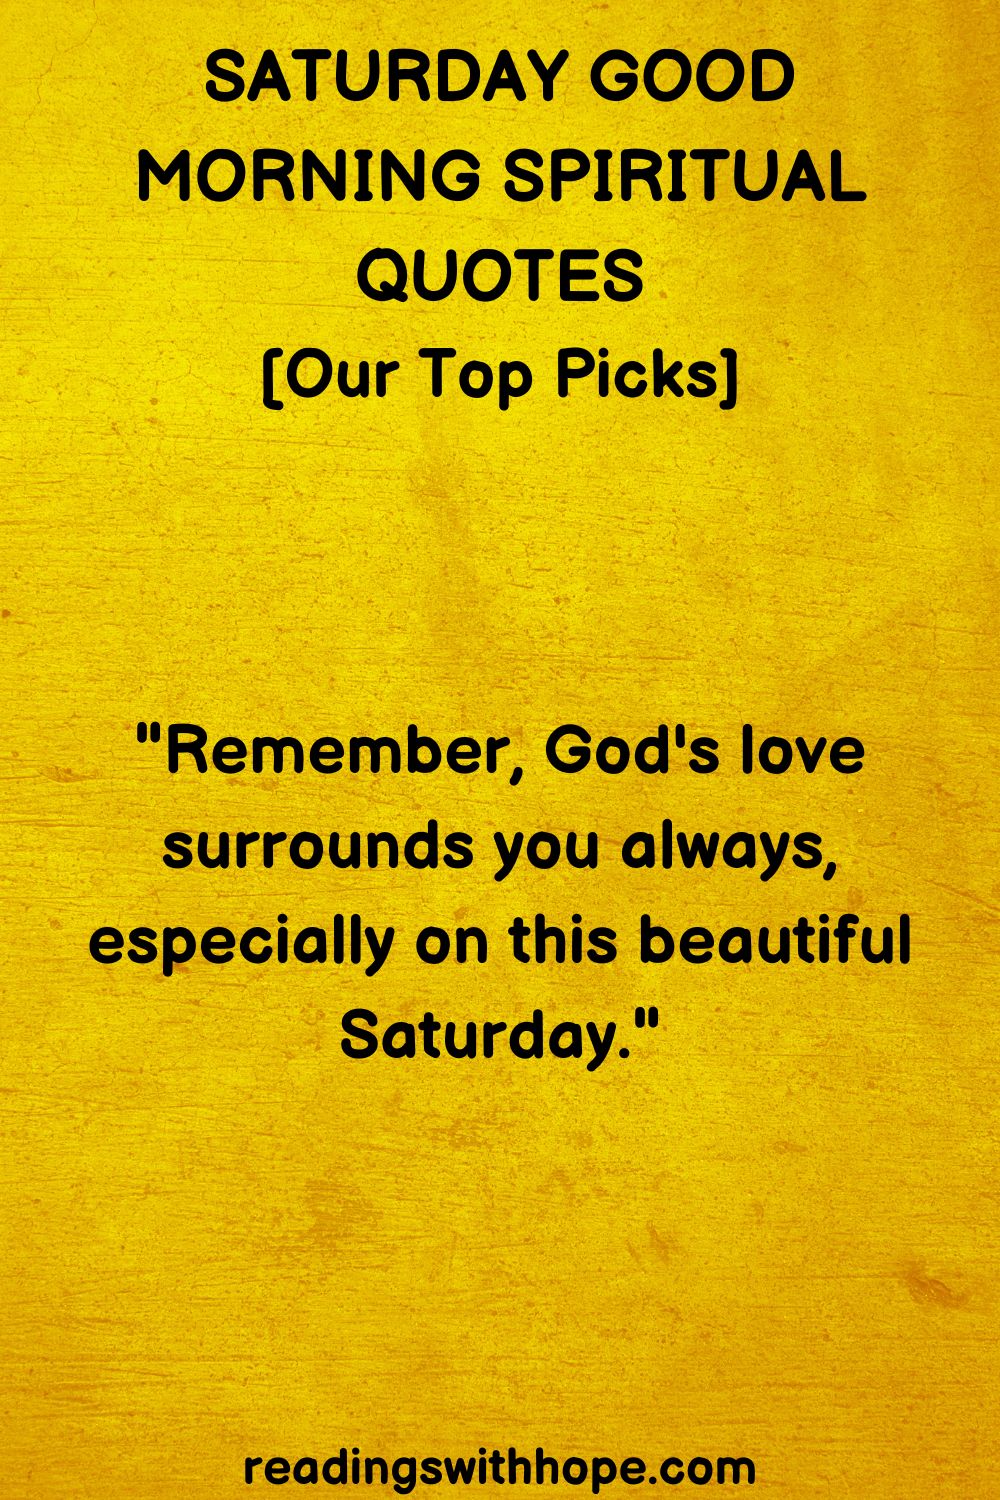 Saturday Good Morning Spiritual Quotes